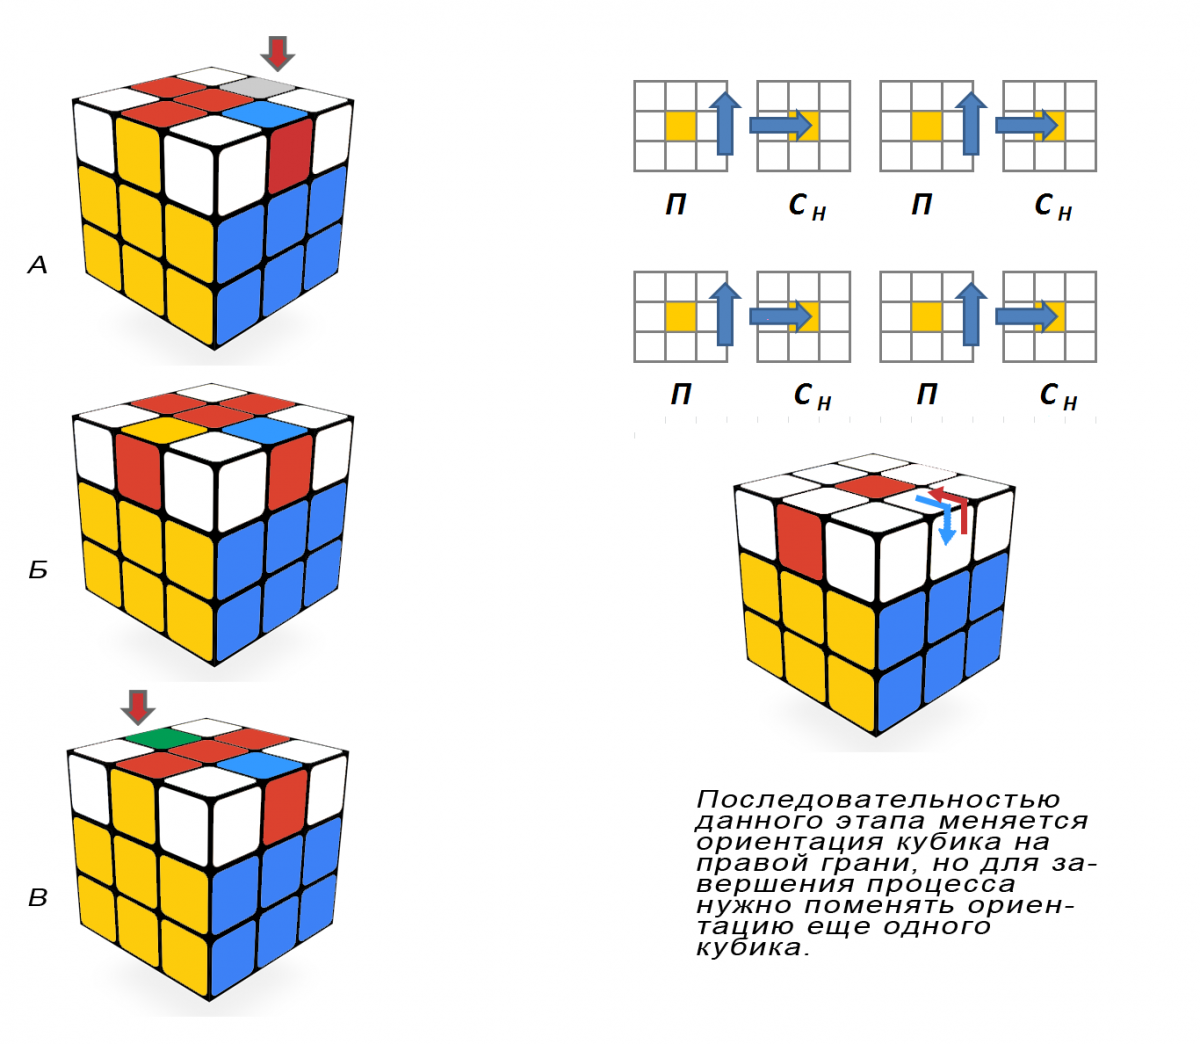 Кубик 3х3 сборка для новичка. Сбор кубика Рубика 3х3 пошагово. Сборка верхнего слоя кубика Рубика 3х3. Кубик рубик 3х3 схема сборки. Формула кубика Рубика 3 на 3.